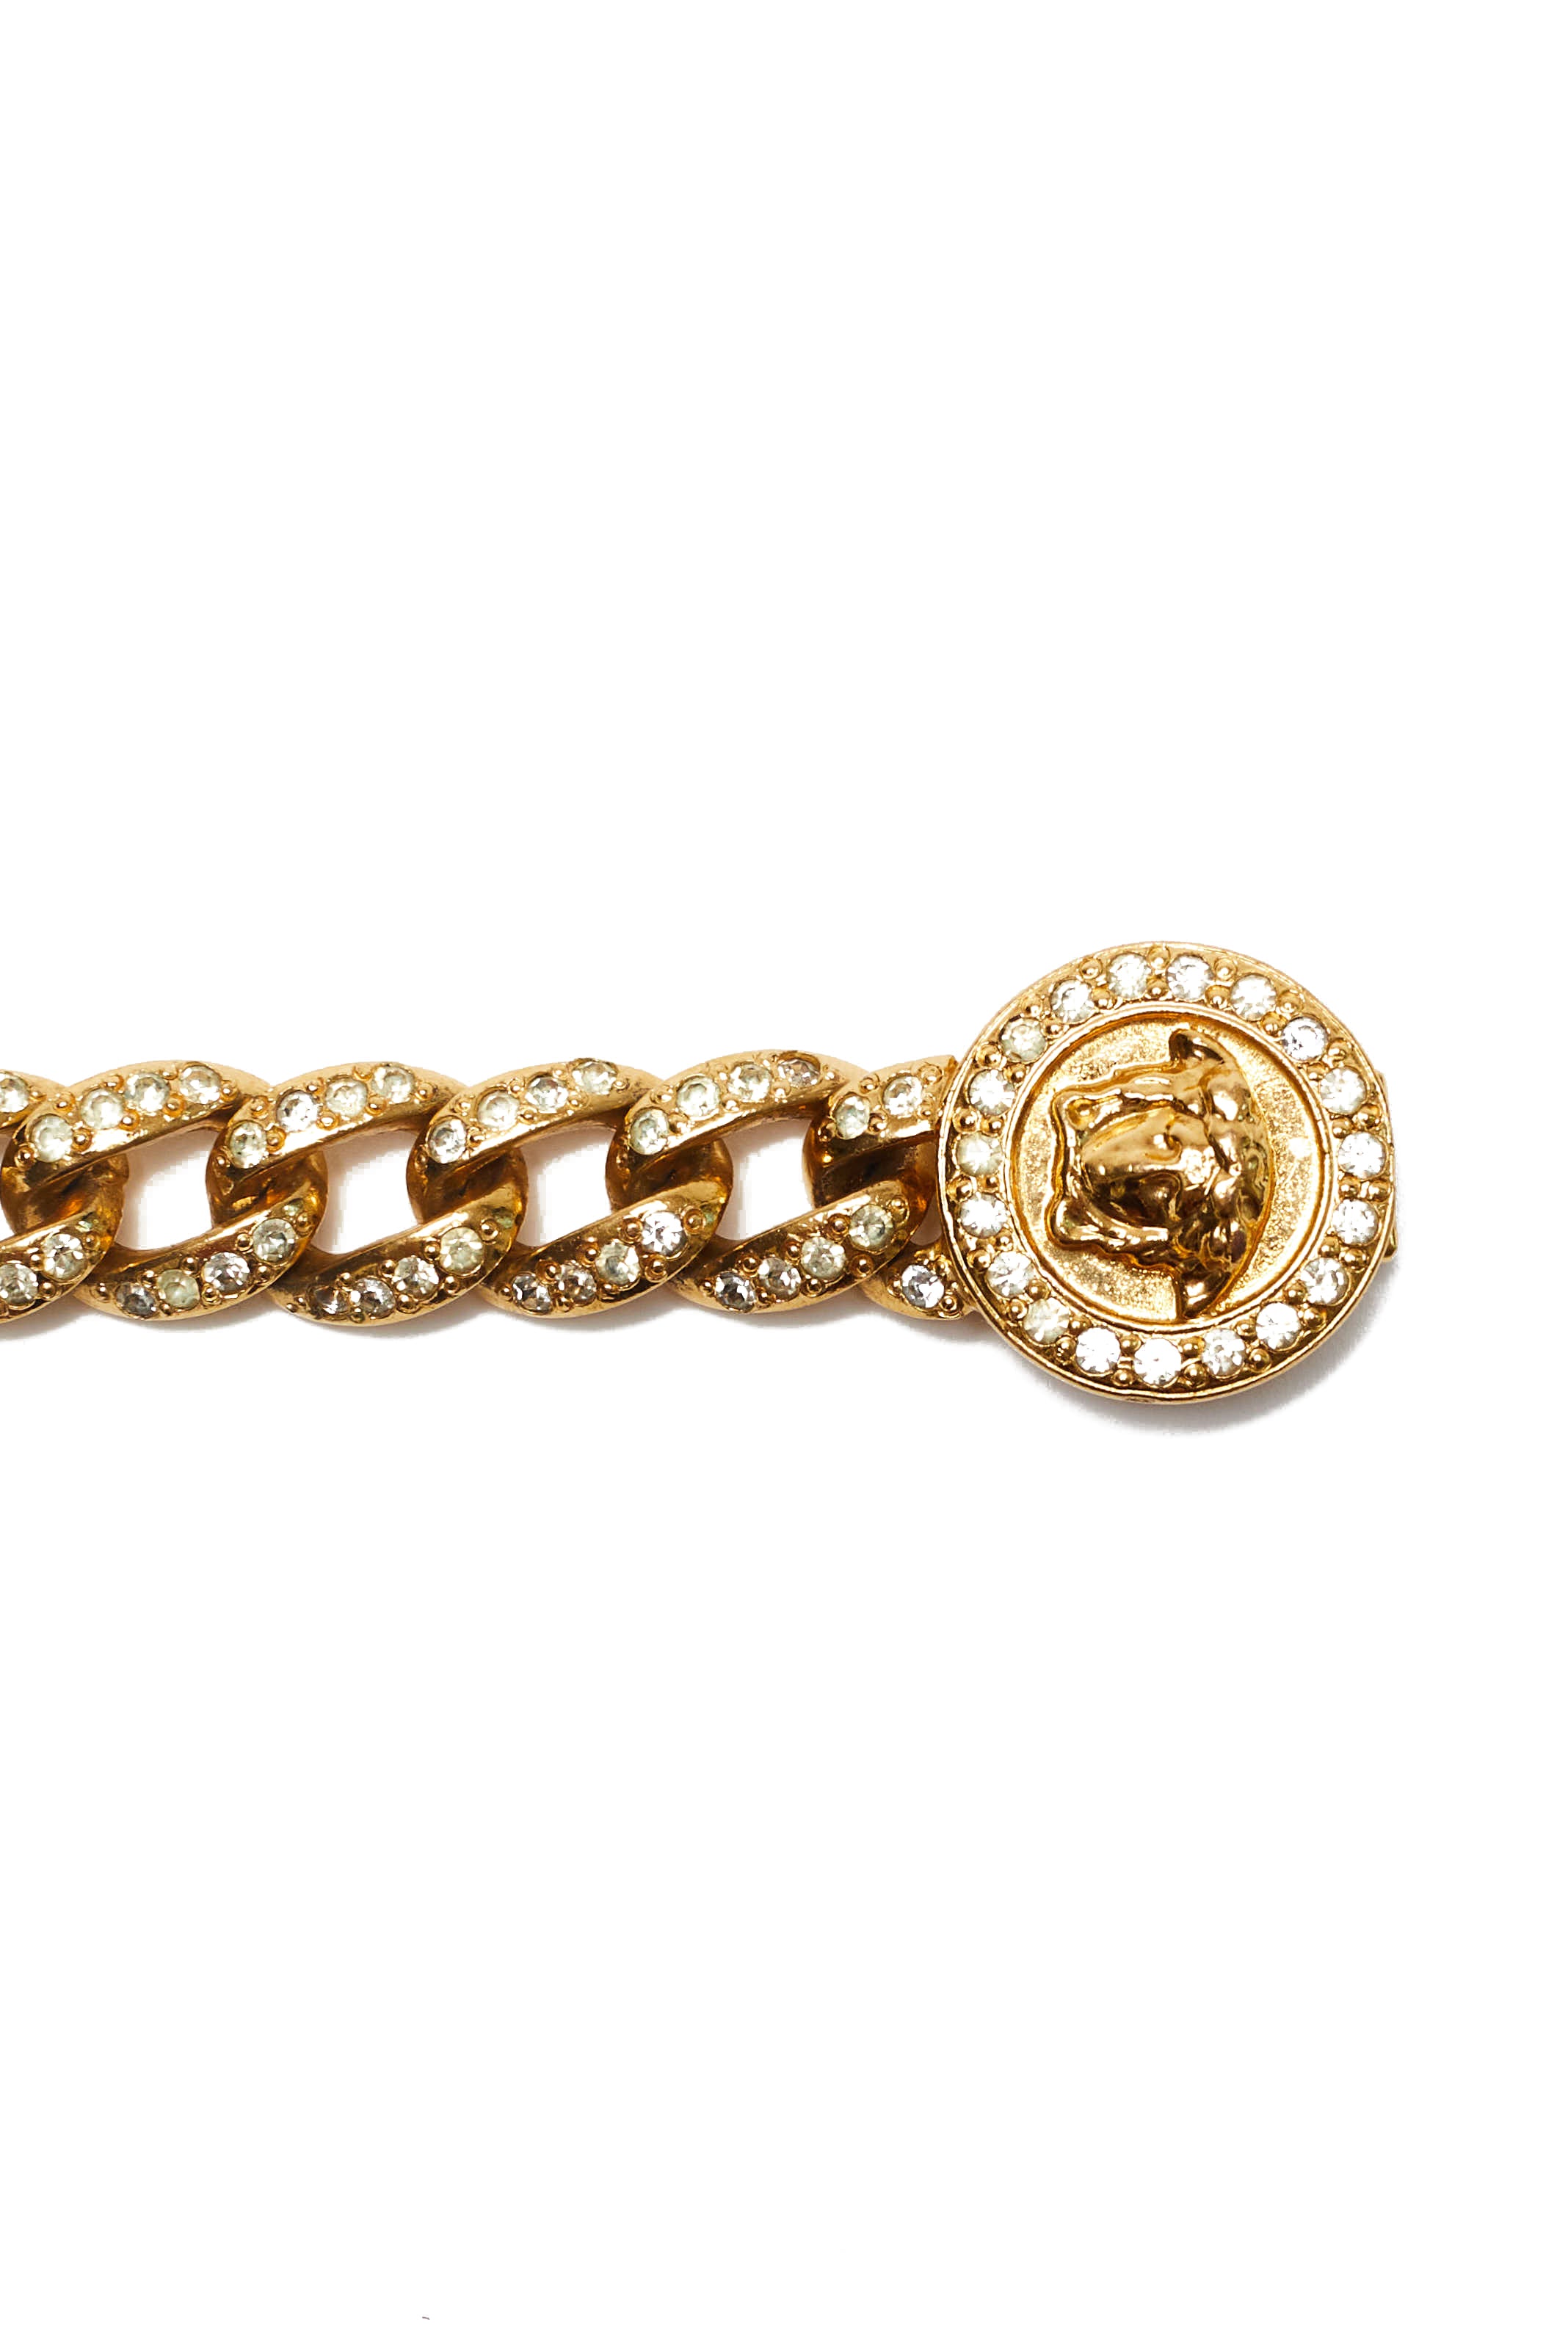 Gianni Versace <br> 90's gold Medusa crystal studded chain bracelet